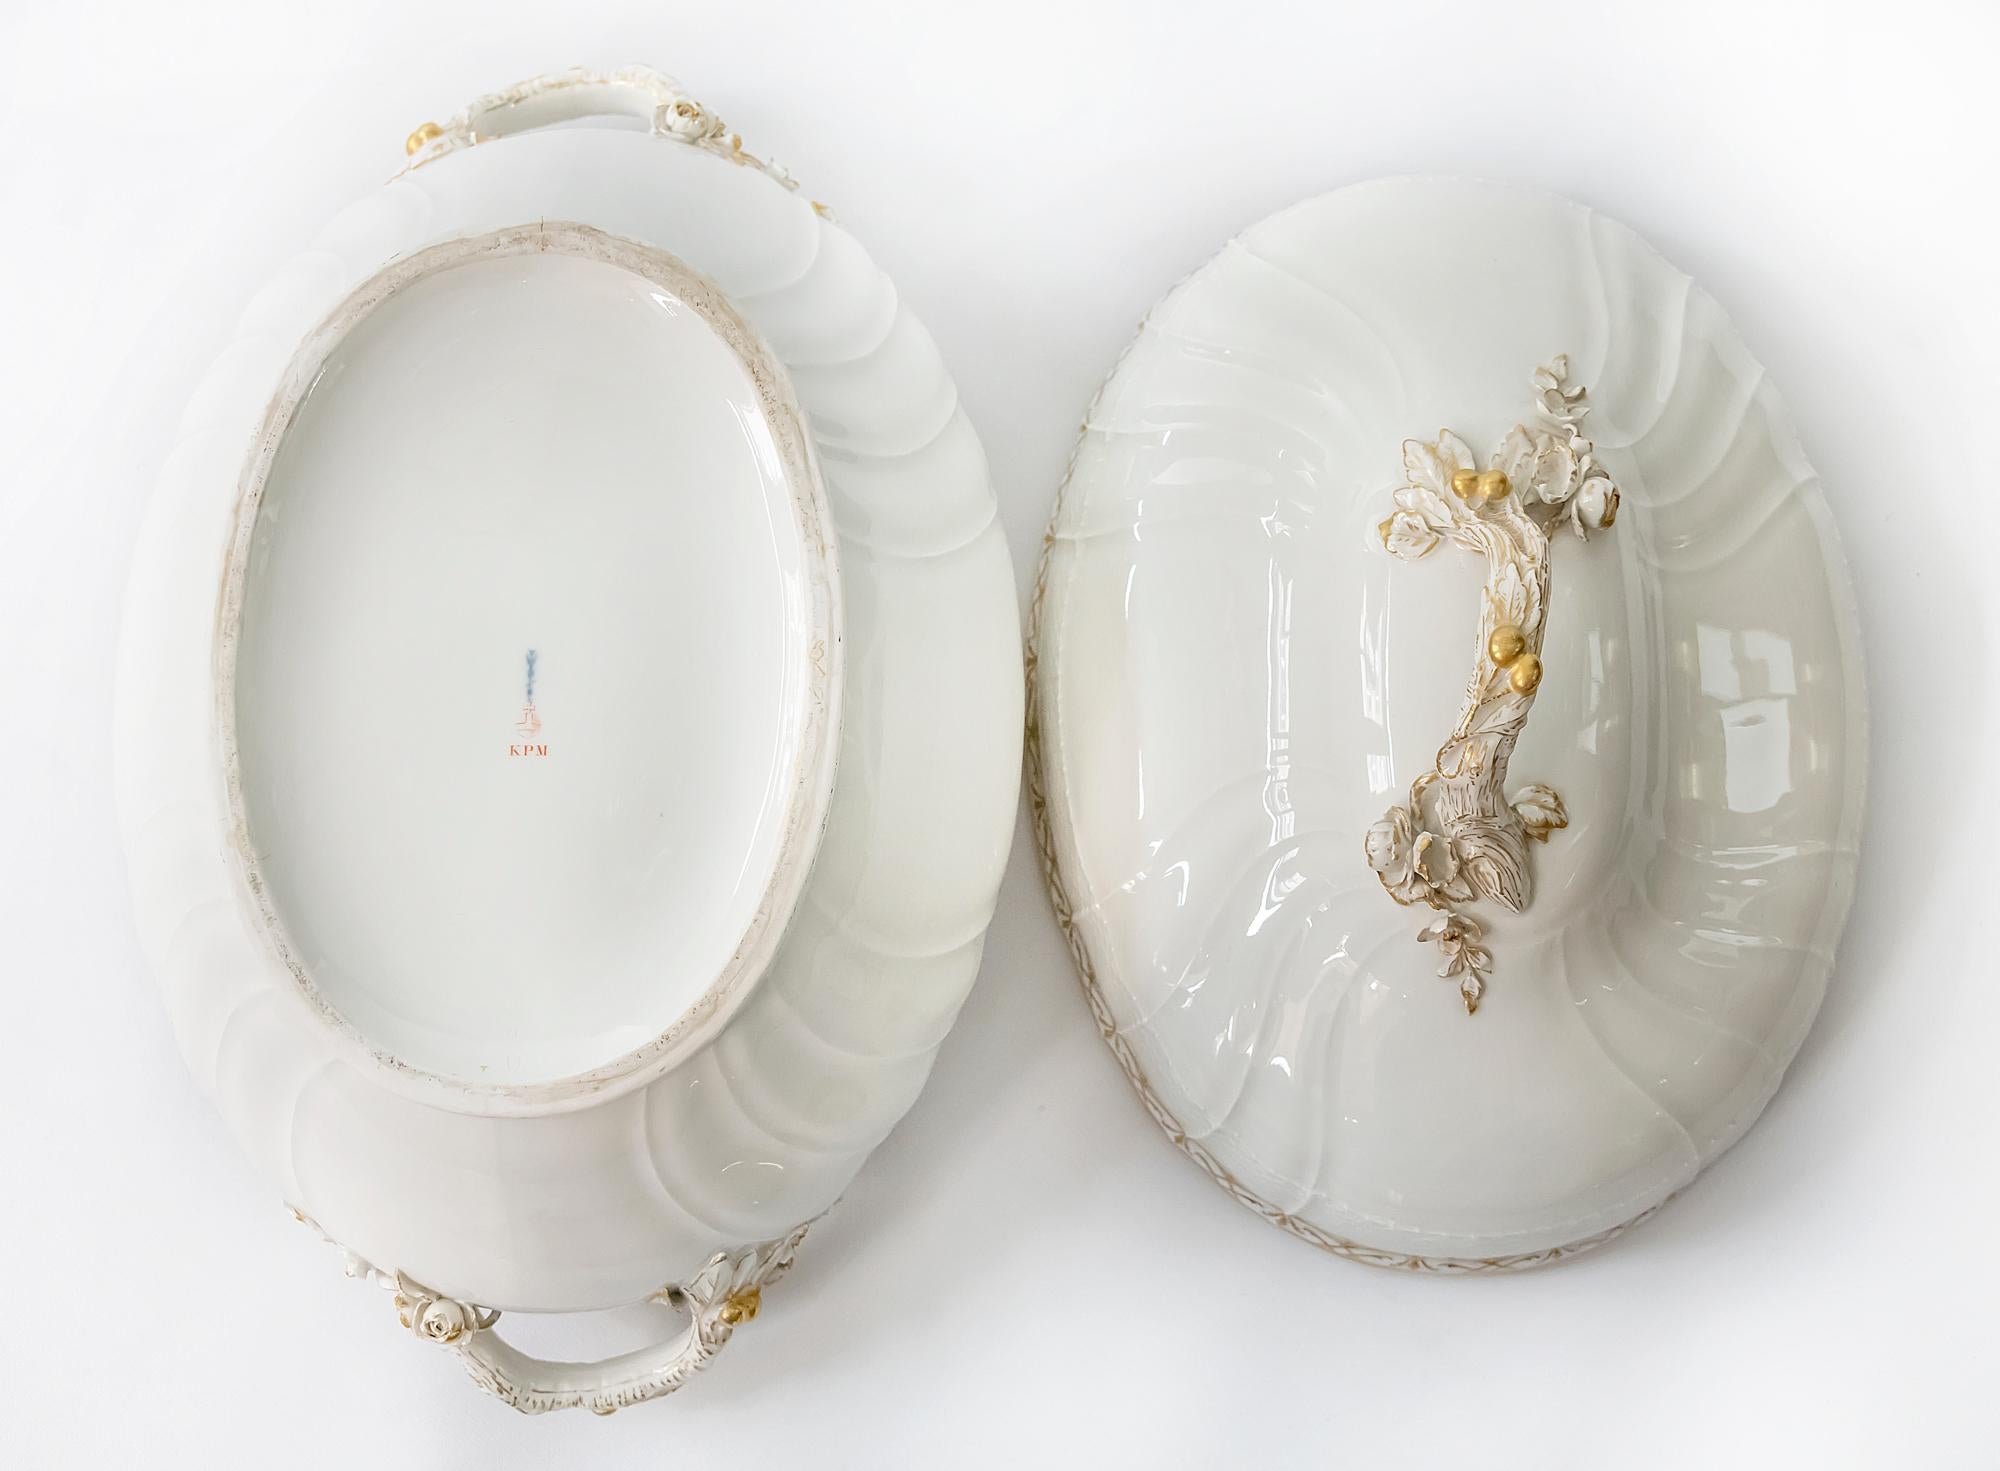 Antique Handmade Porcelain Soup Tureen by KPM For Sale 1